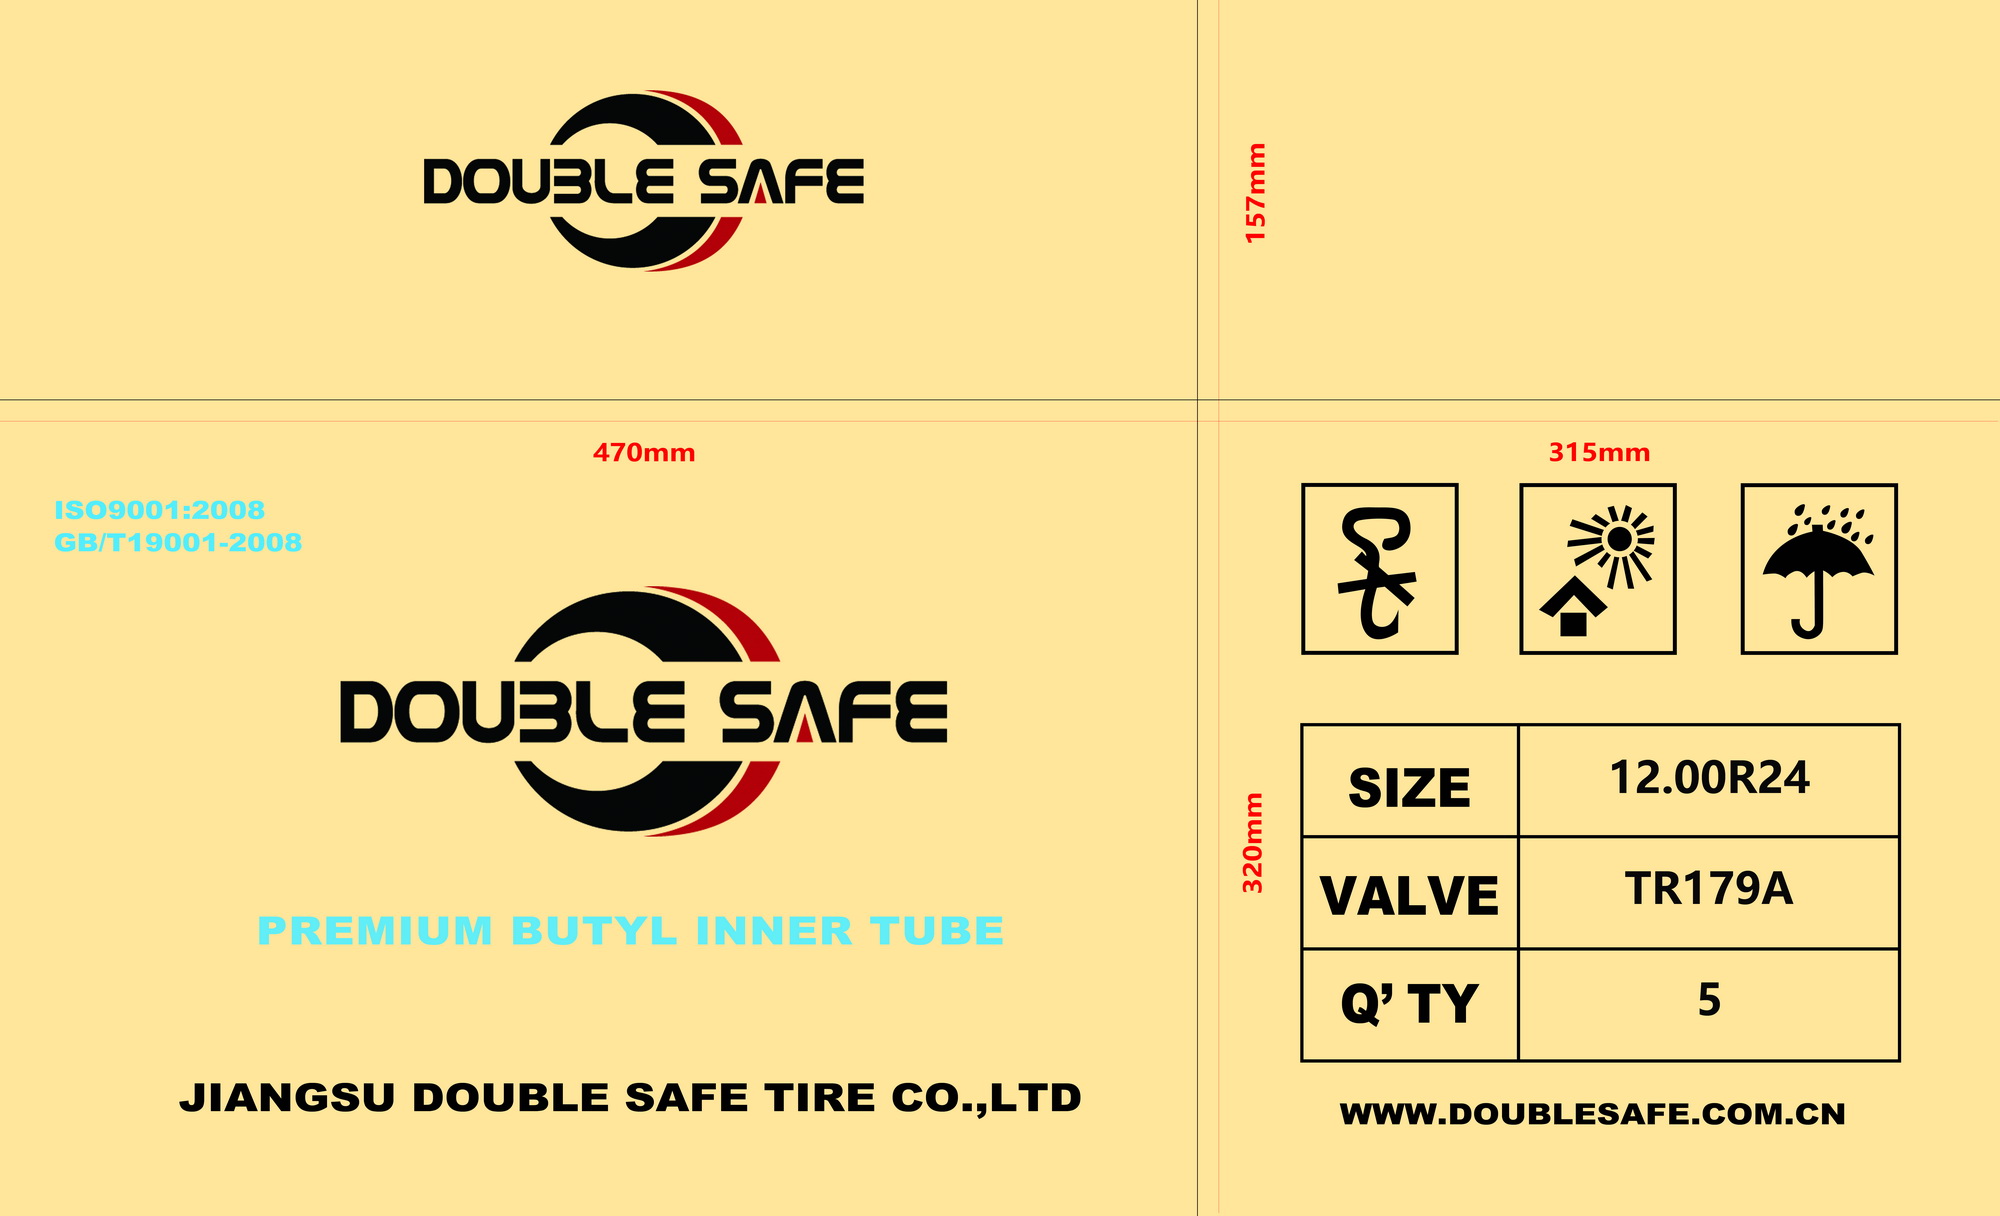 double safe butyl inner tube carton box